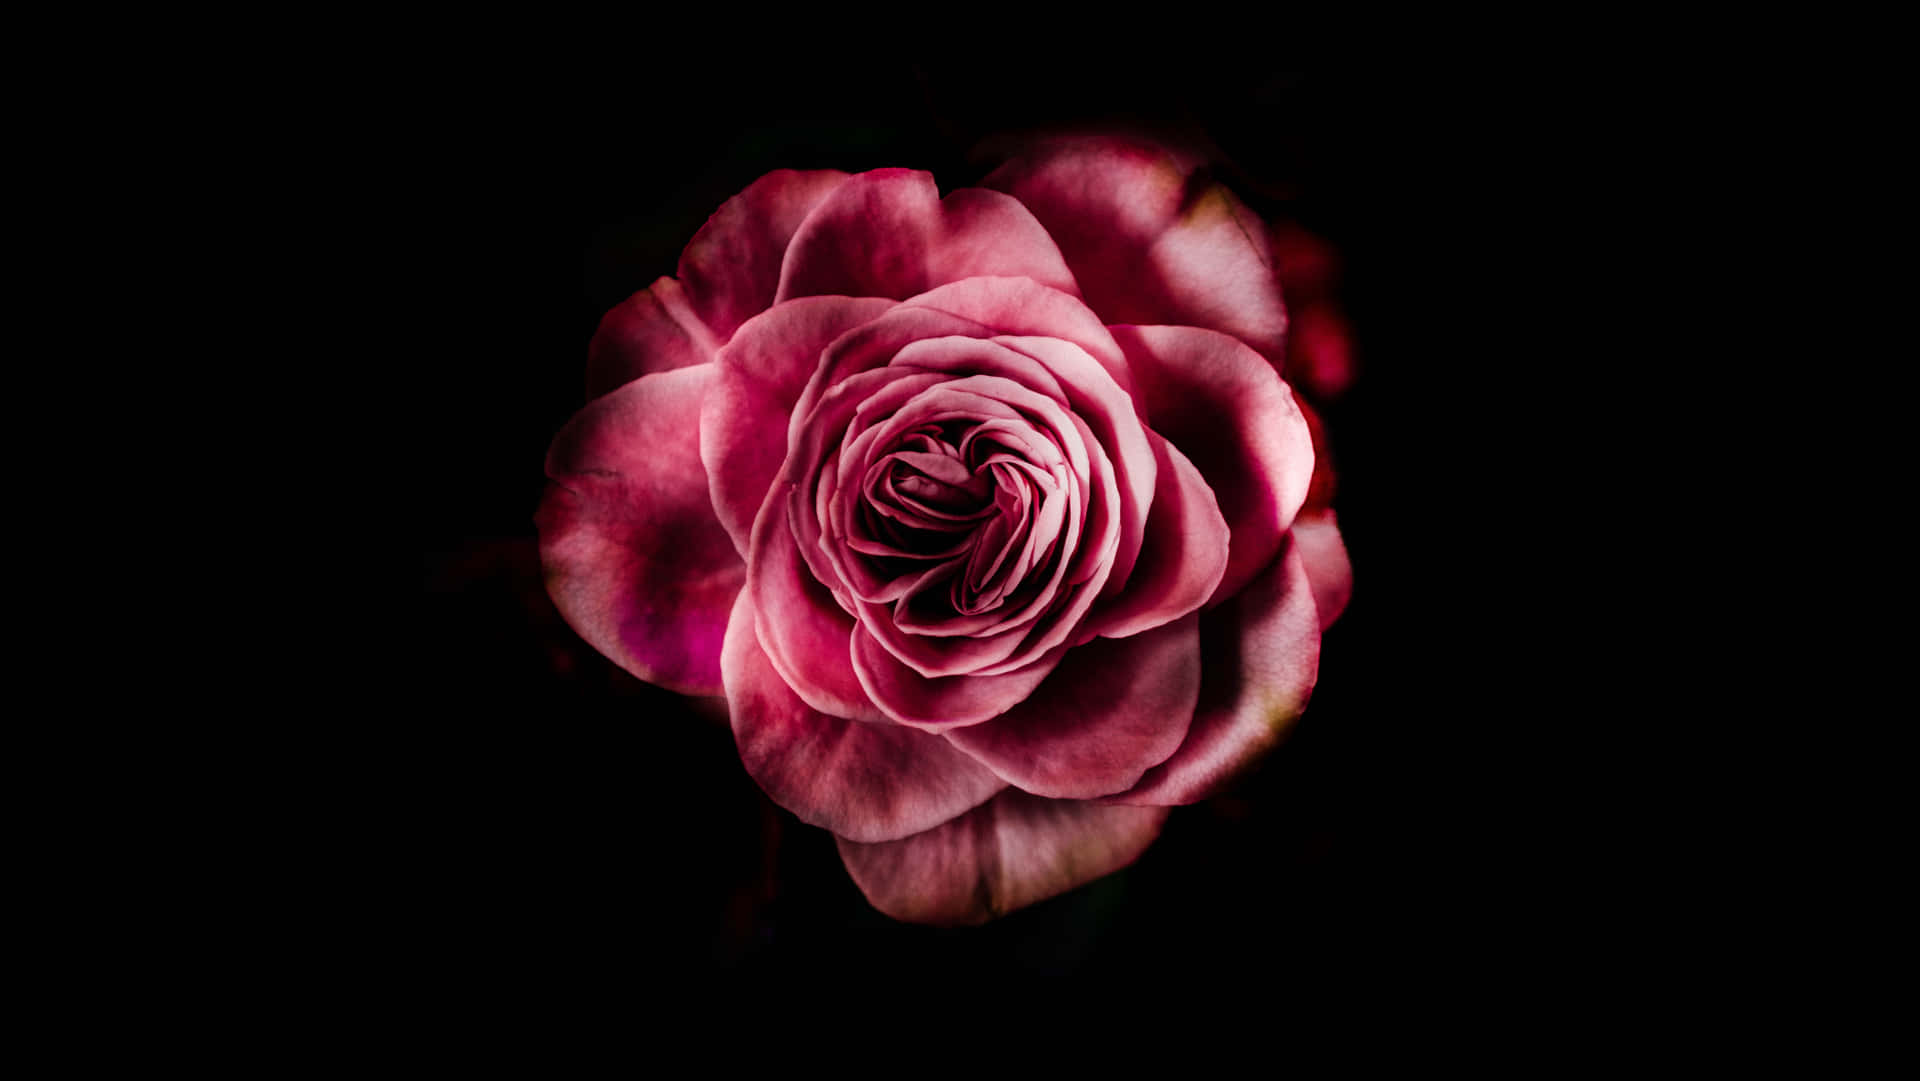 Dark Pink Roseon Black Background.jpg Wallpaper